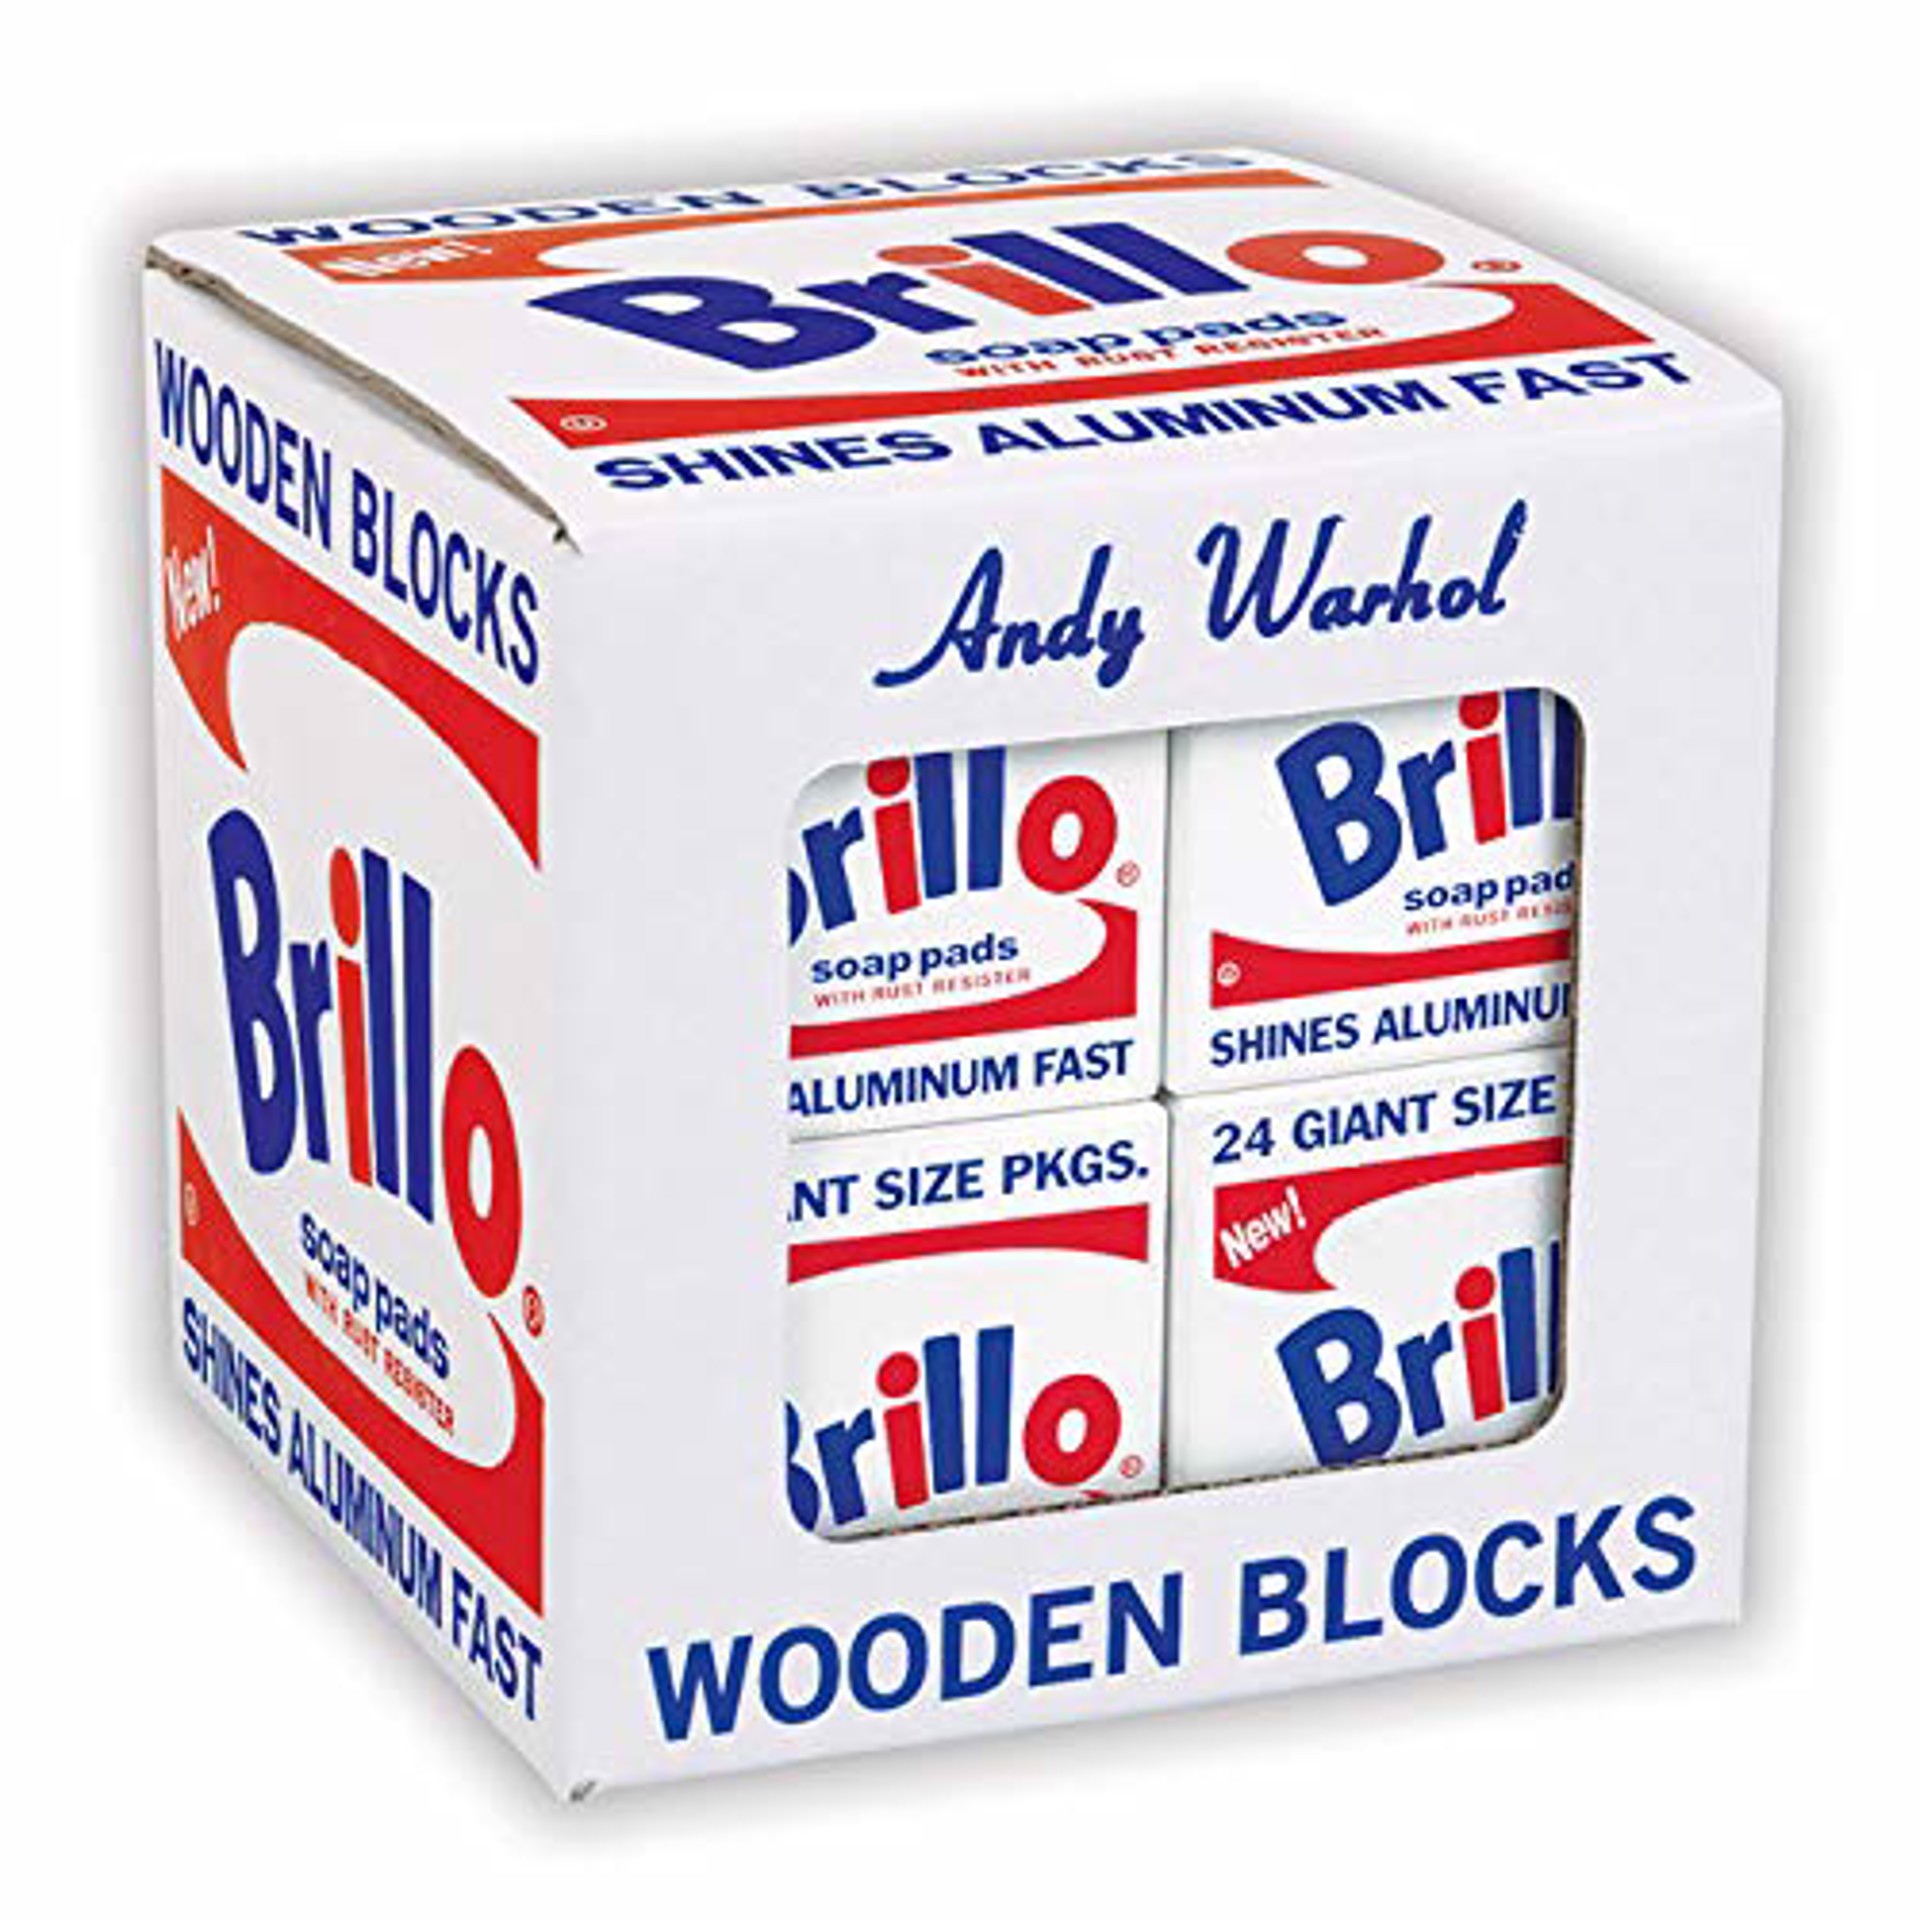 Brillo Wooden Blocks by Andy Warhol